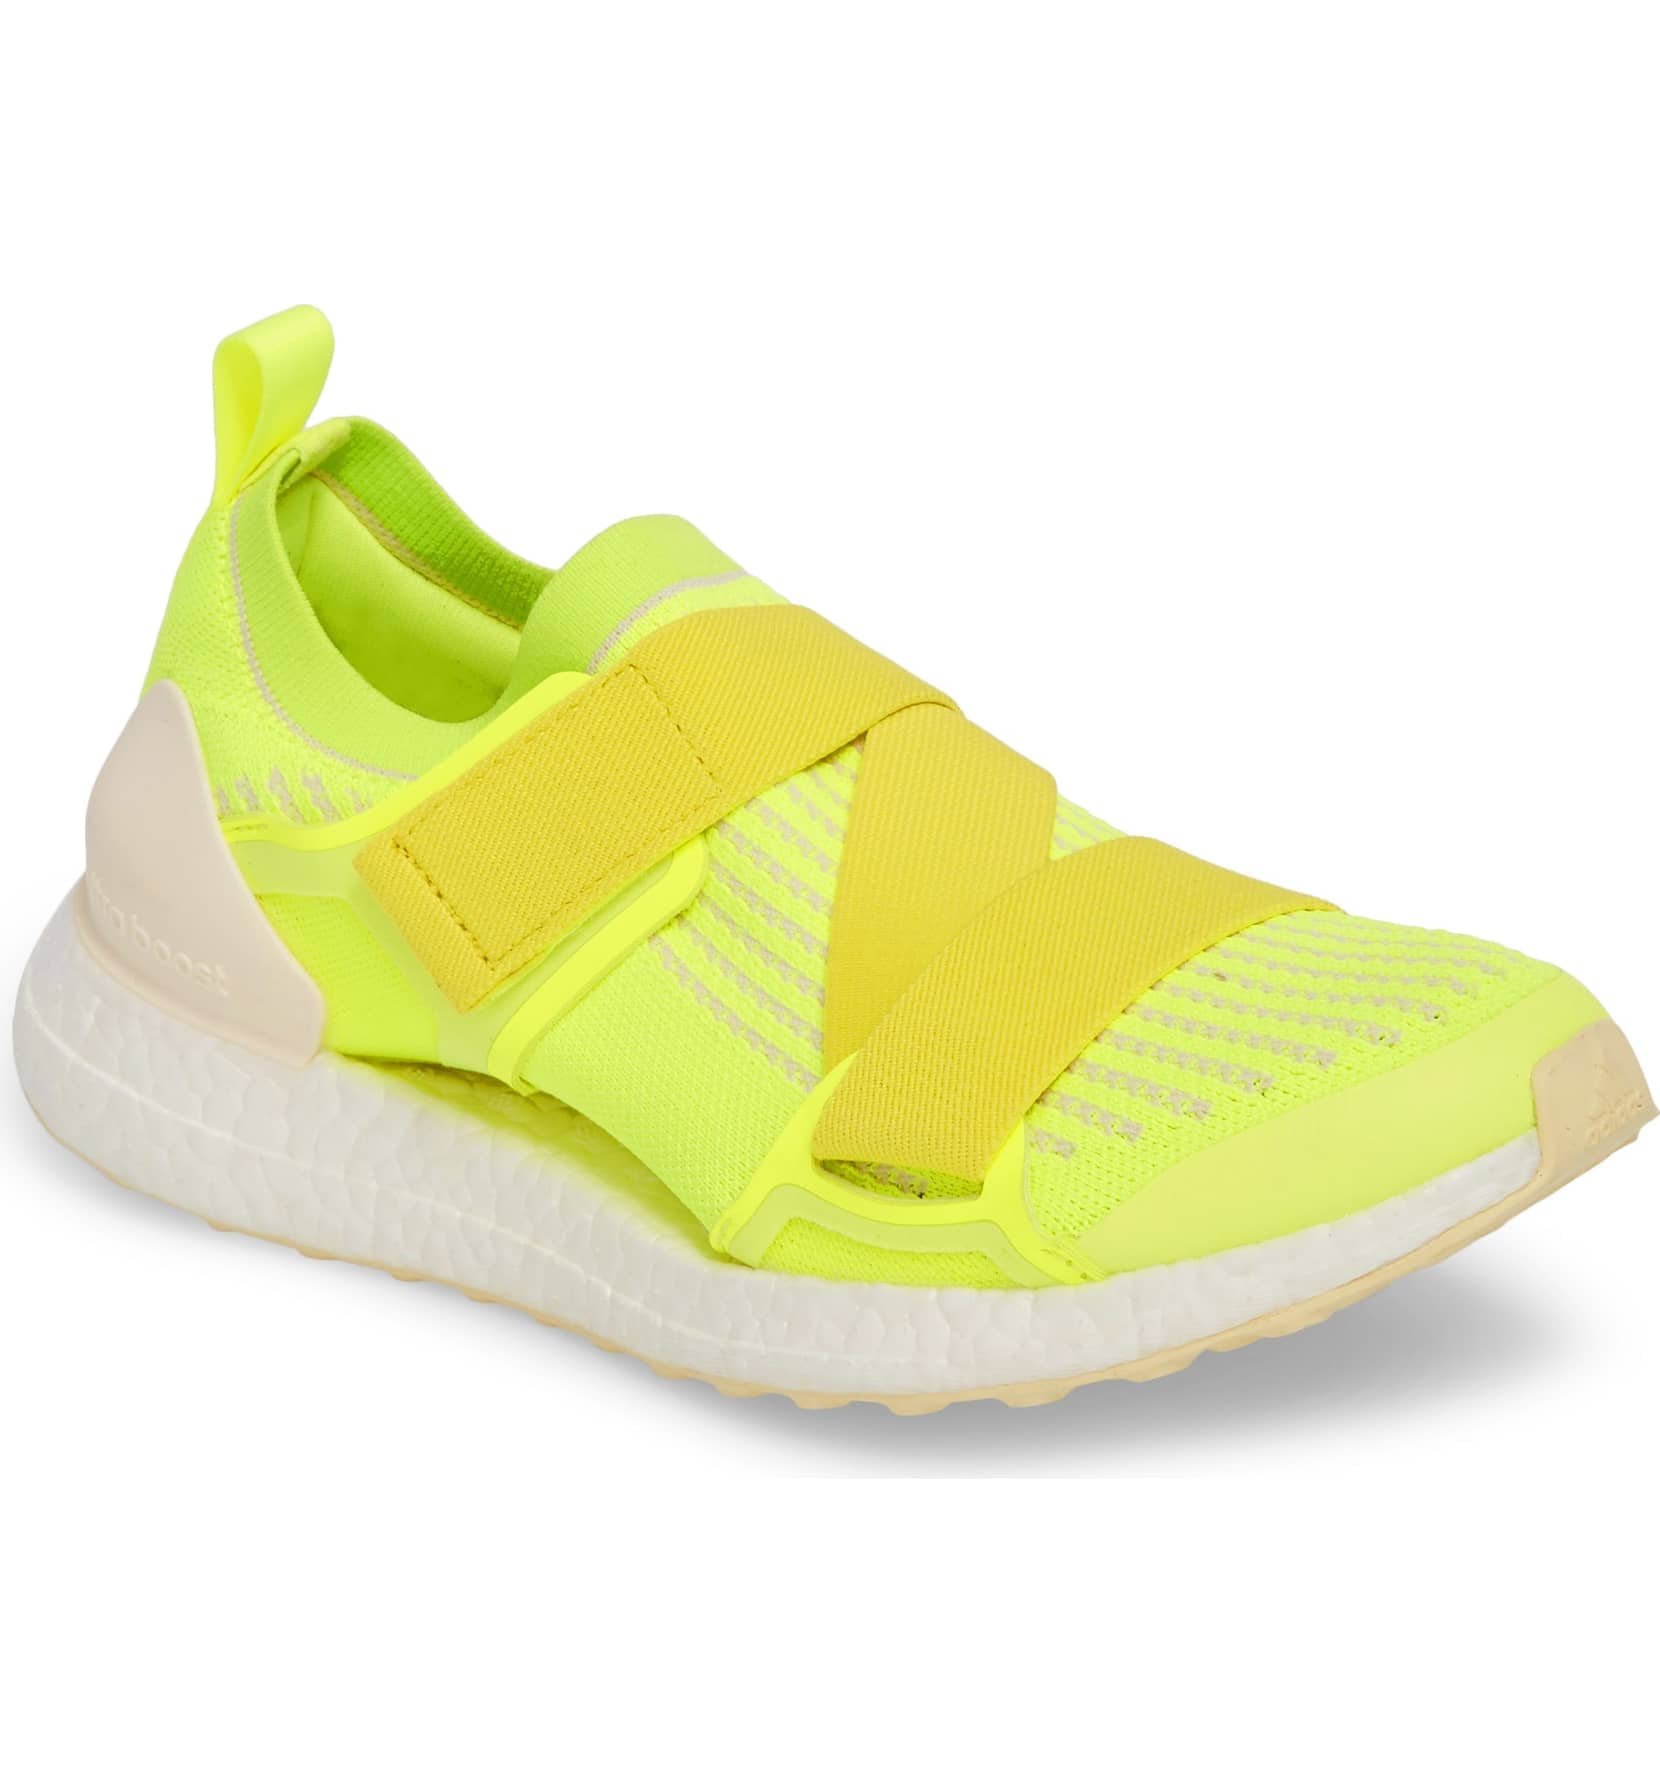 Adidas UltraBoost X Running Shoe